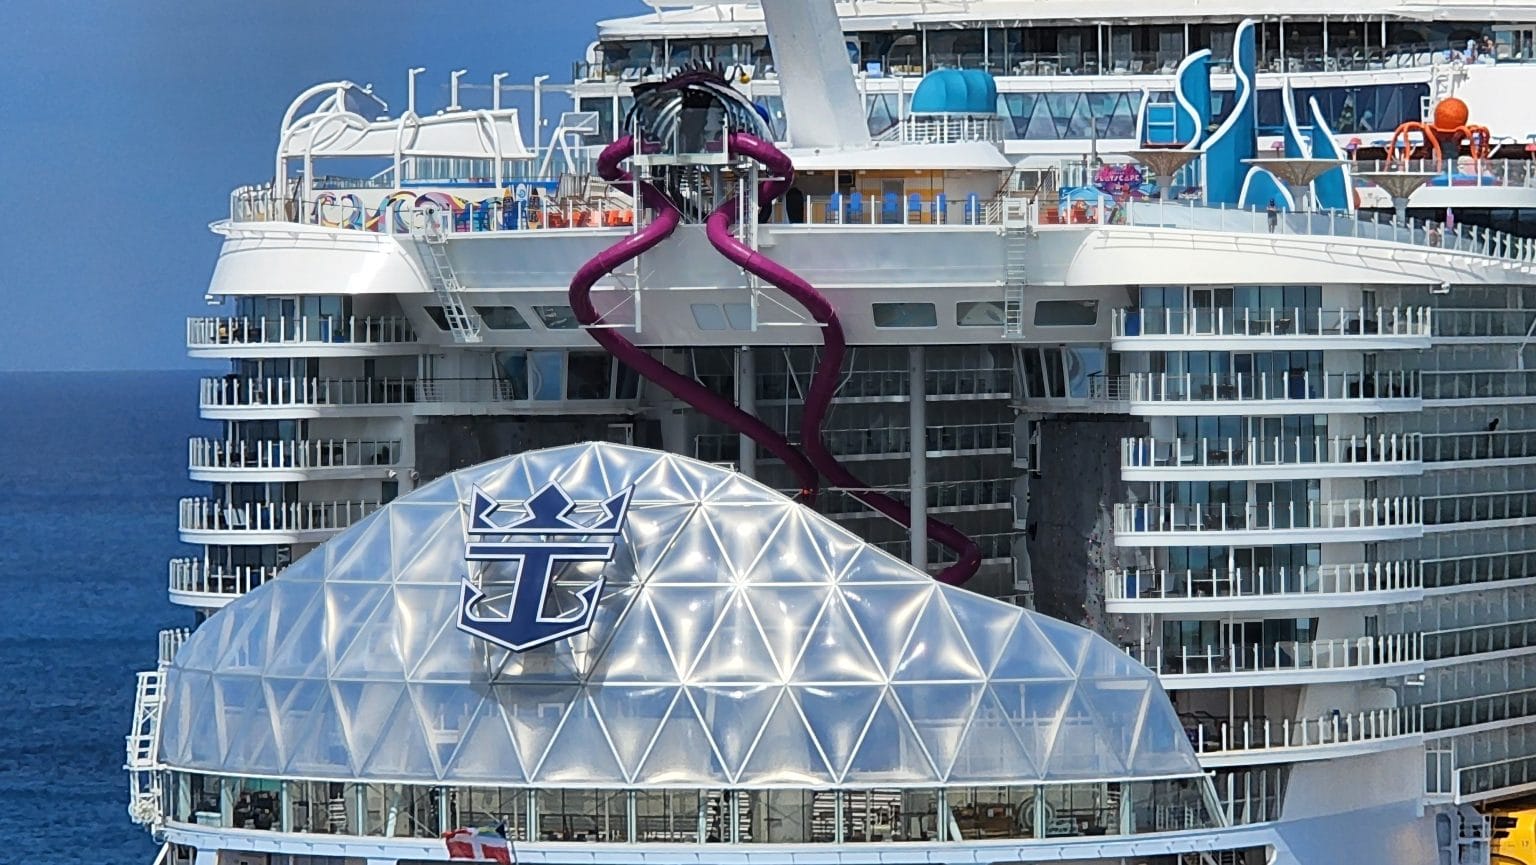 royal caribbean cruise ships utopia